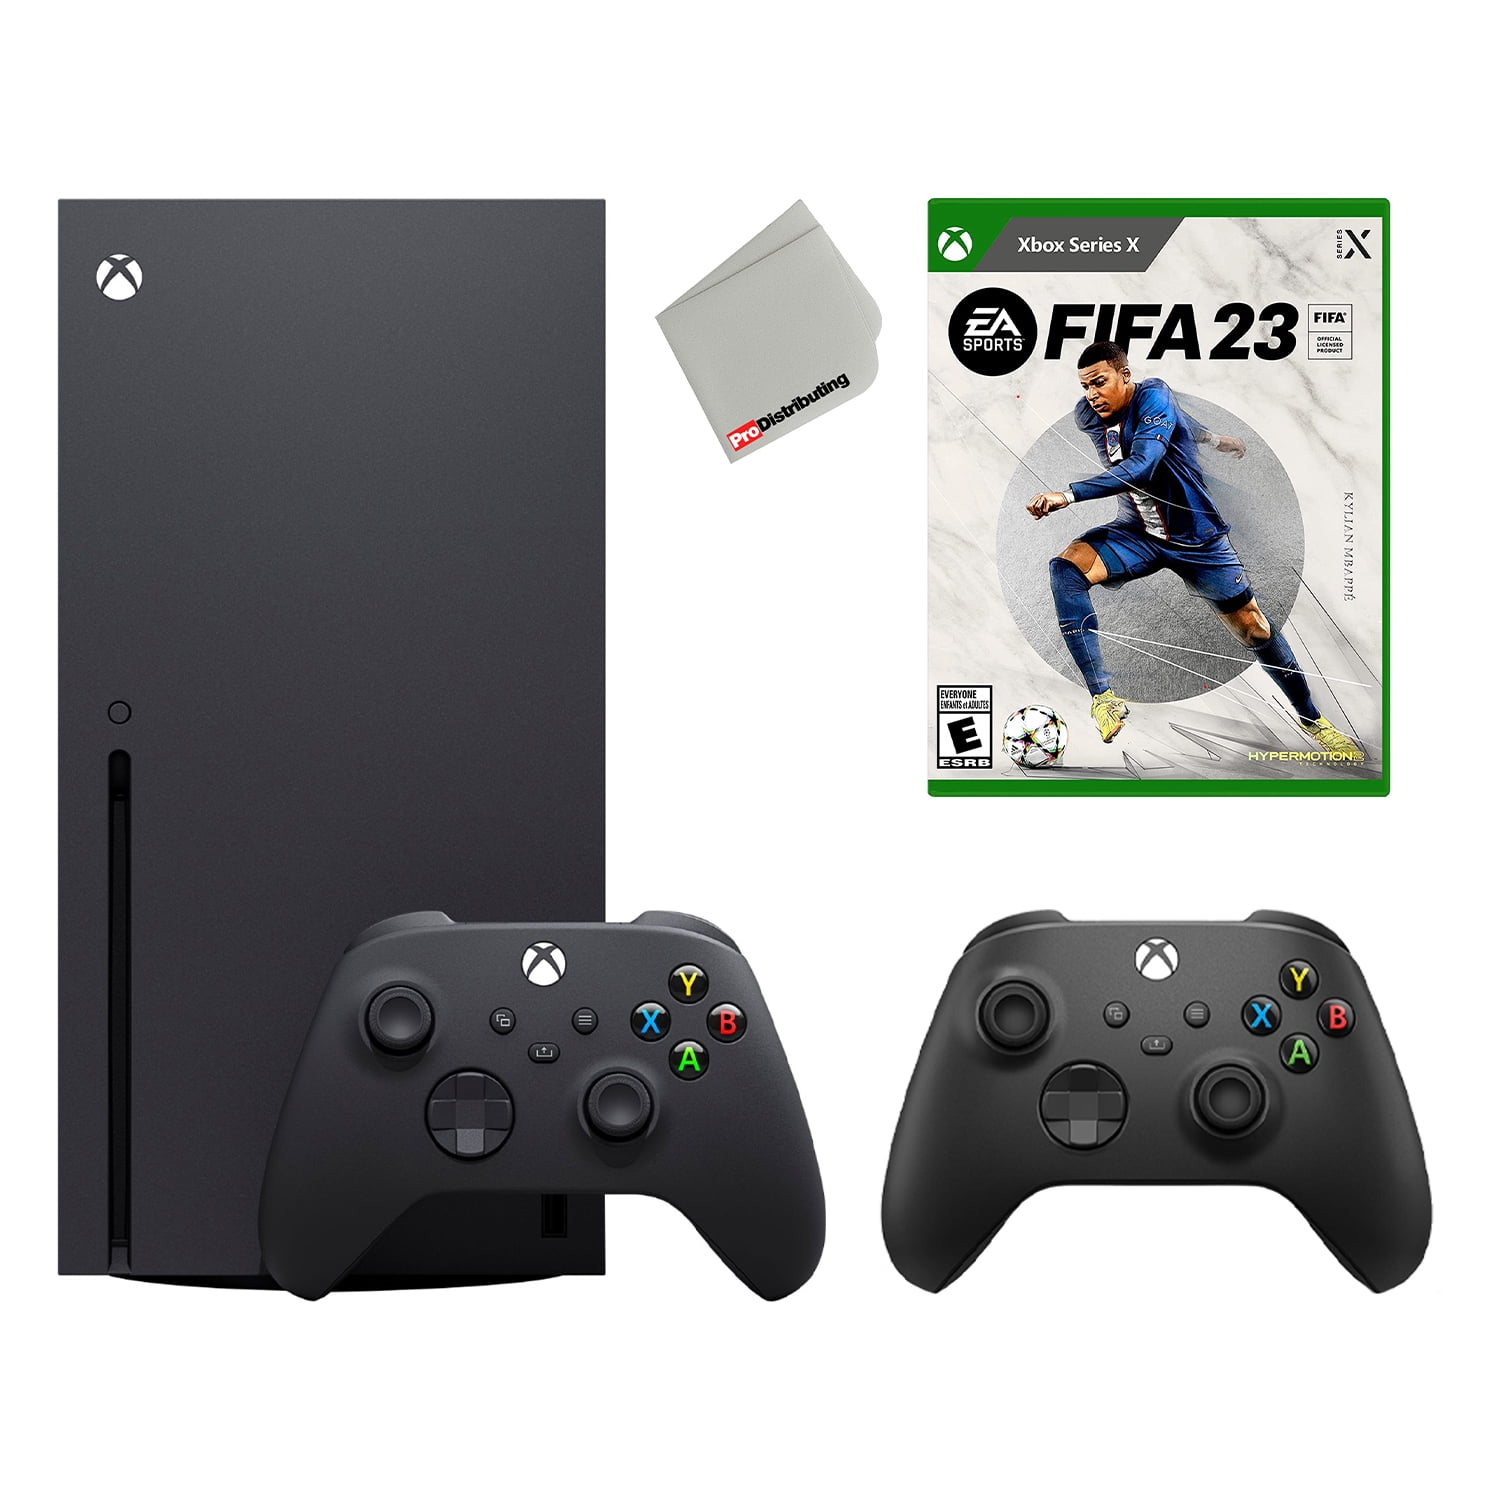 FIFA 23 - Xbox Series X, Xbox Series X